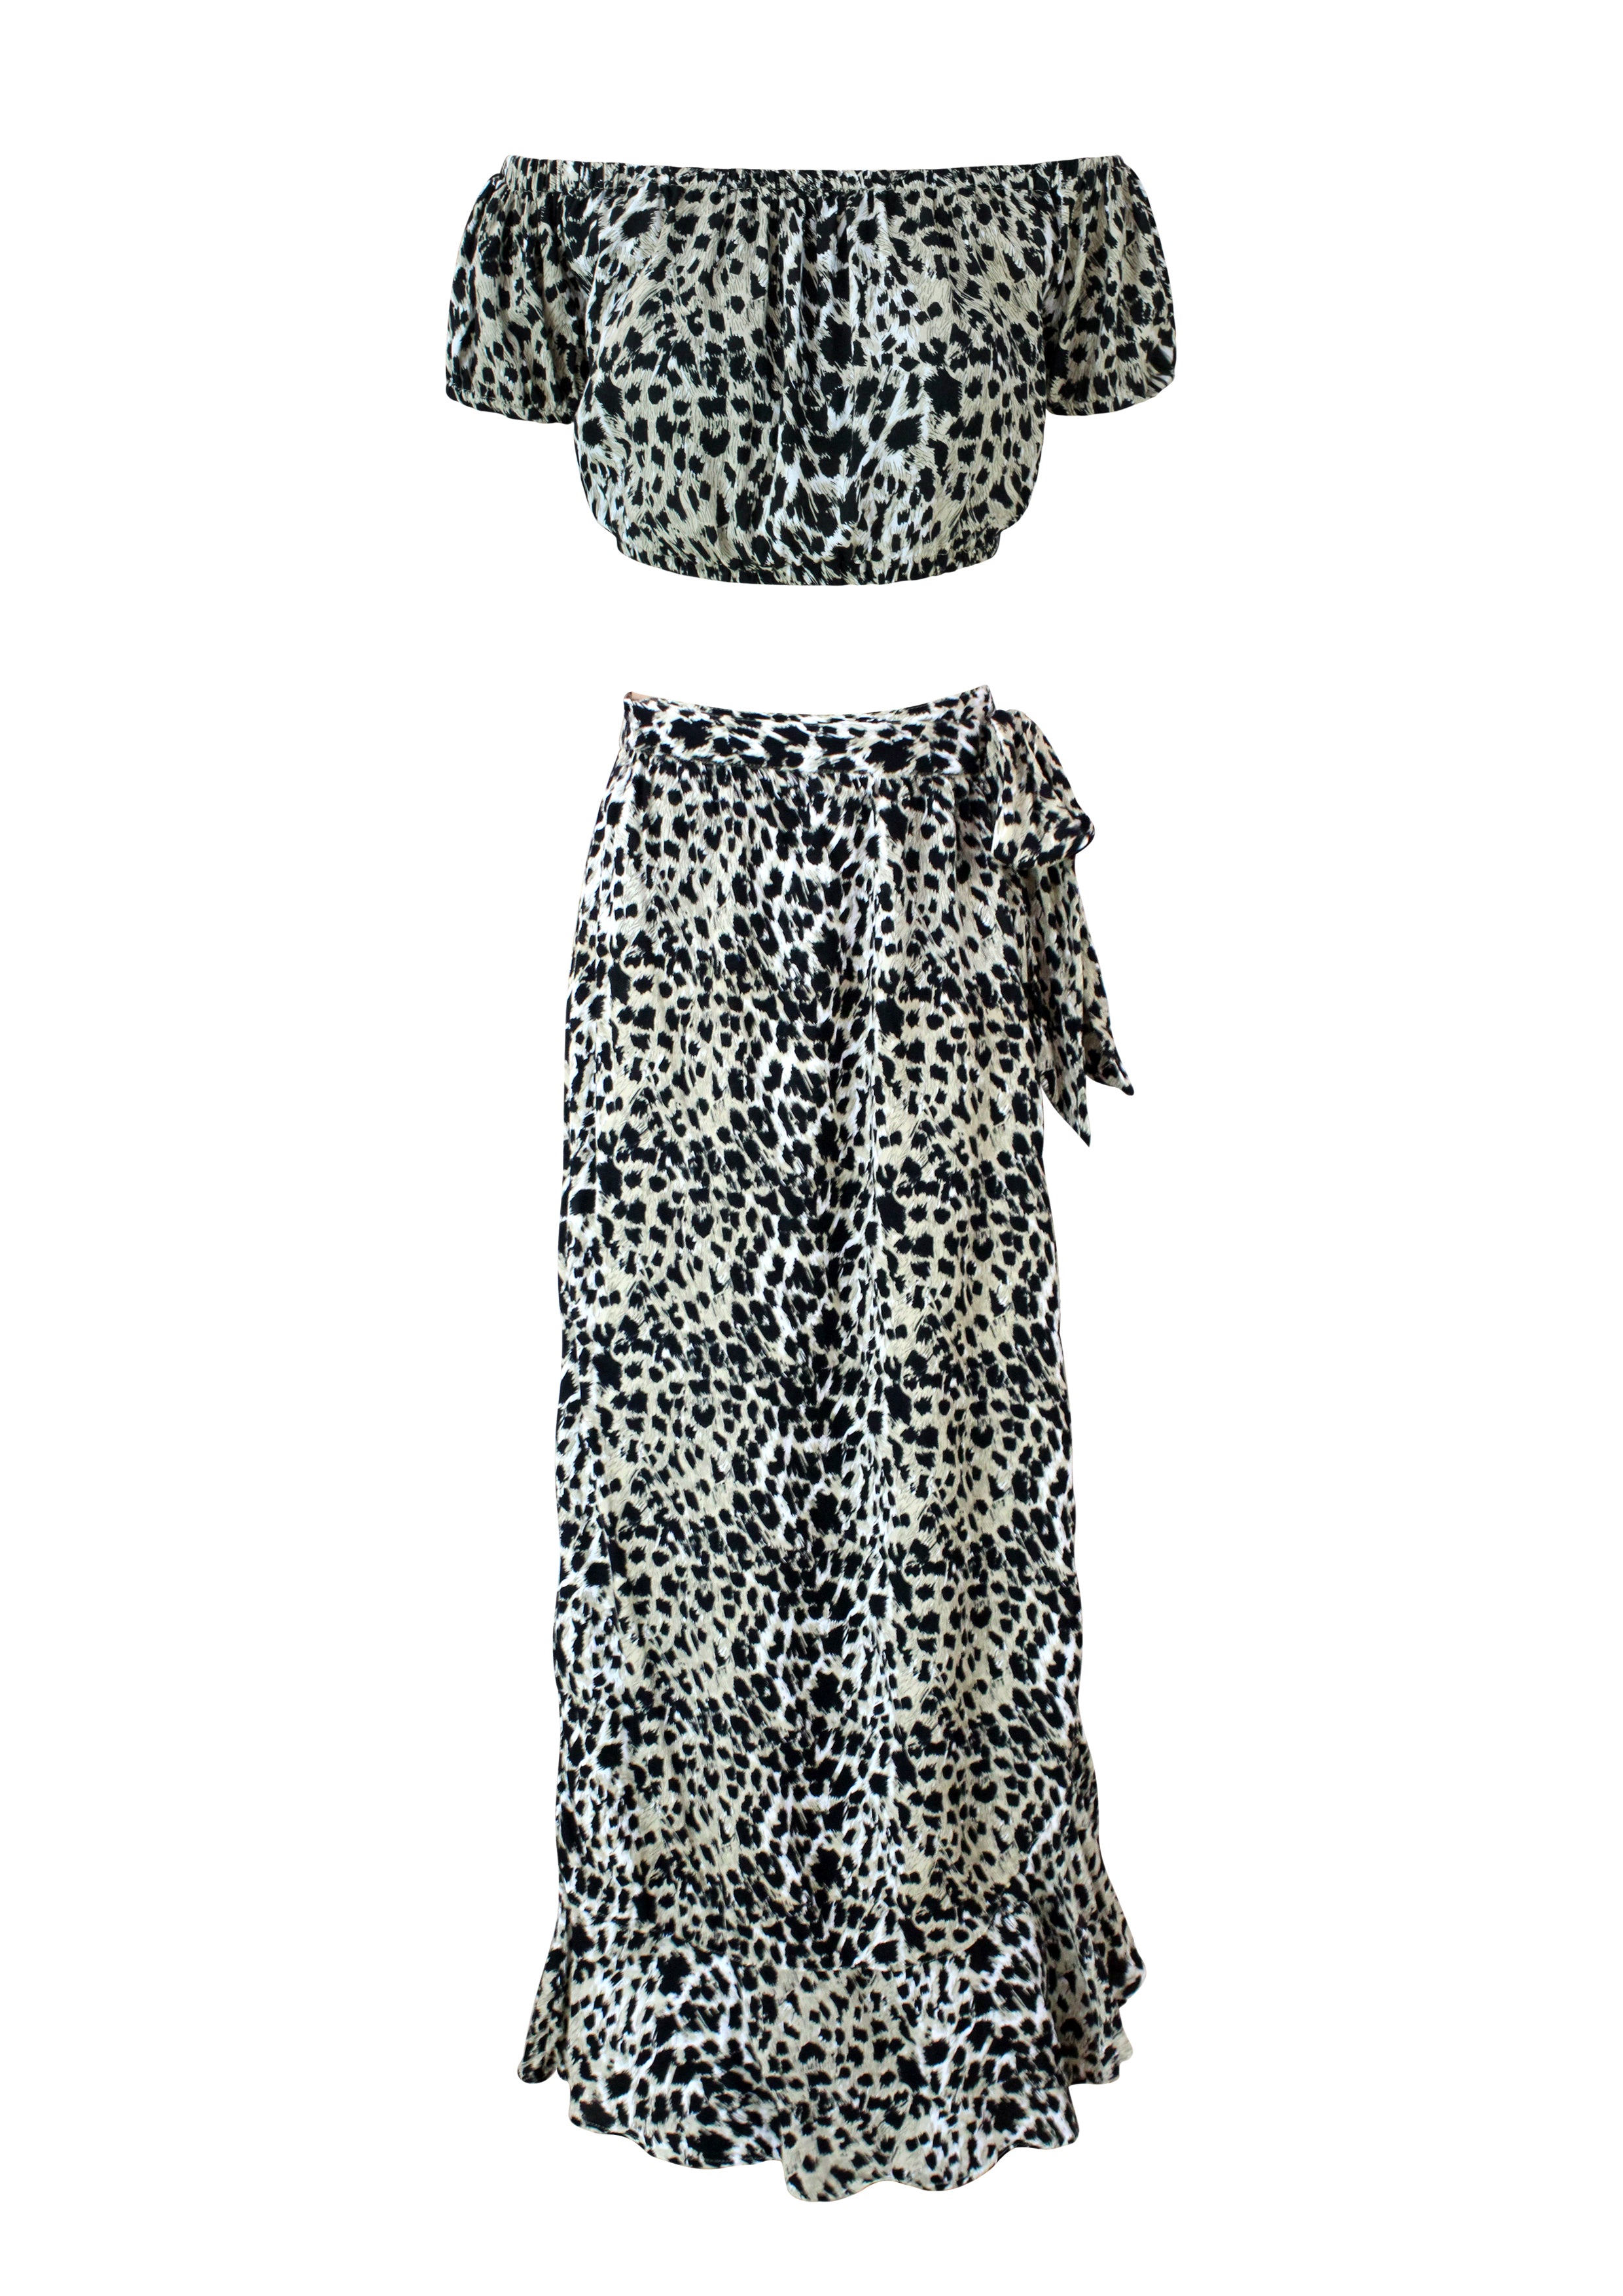 Leopard Black Katya Top and Skirt - Resort Collection